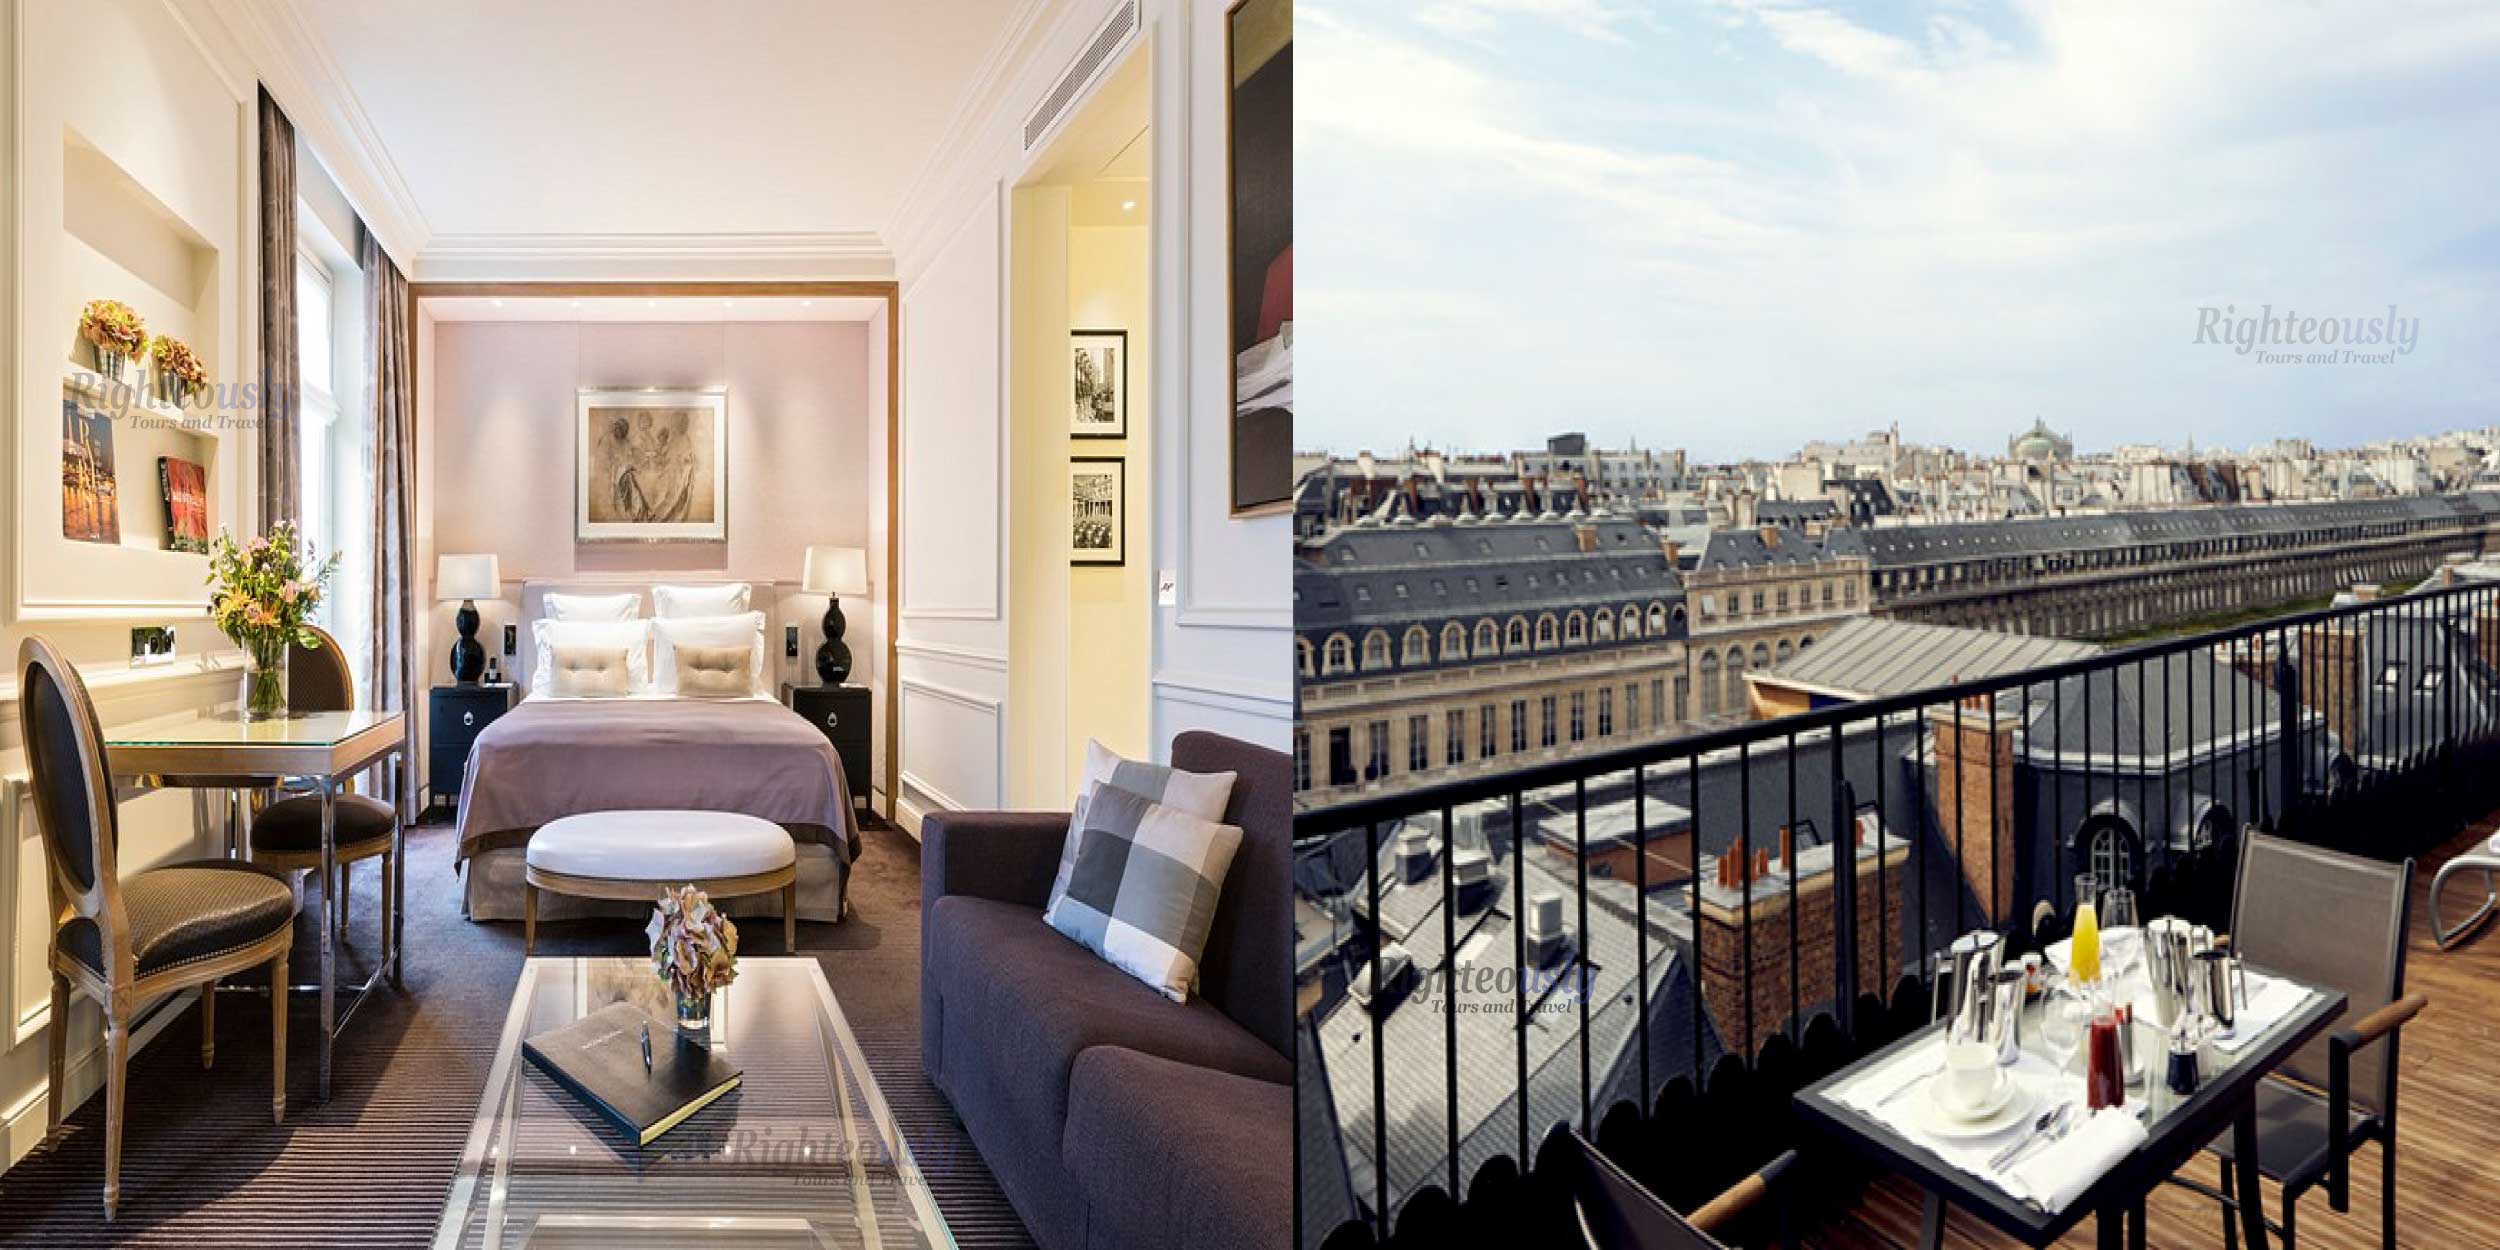 Grand Hôtel du Palais Royal, Hilton hotels in Paris near Eiffel tower